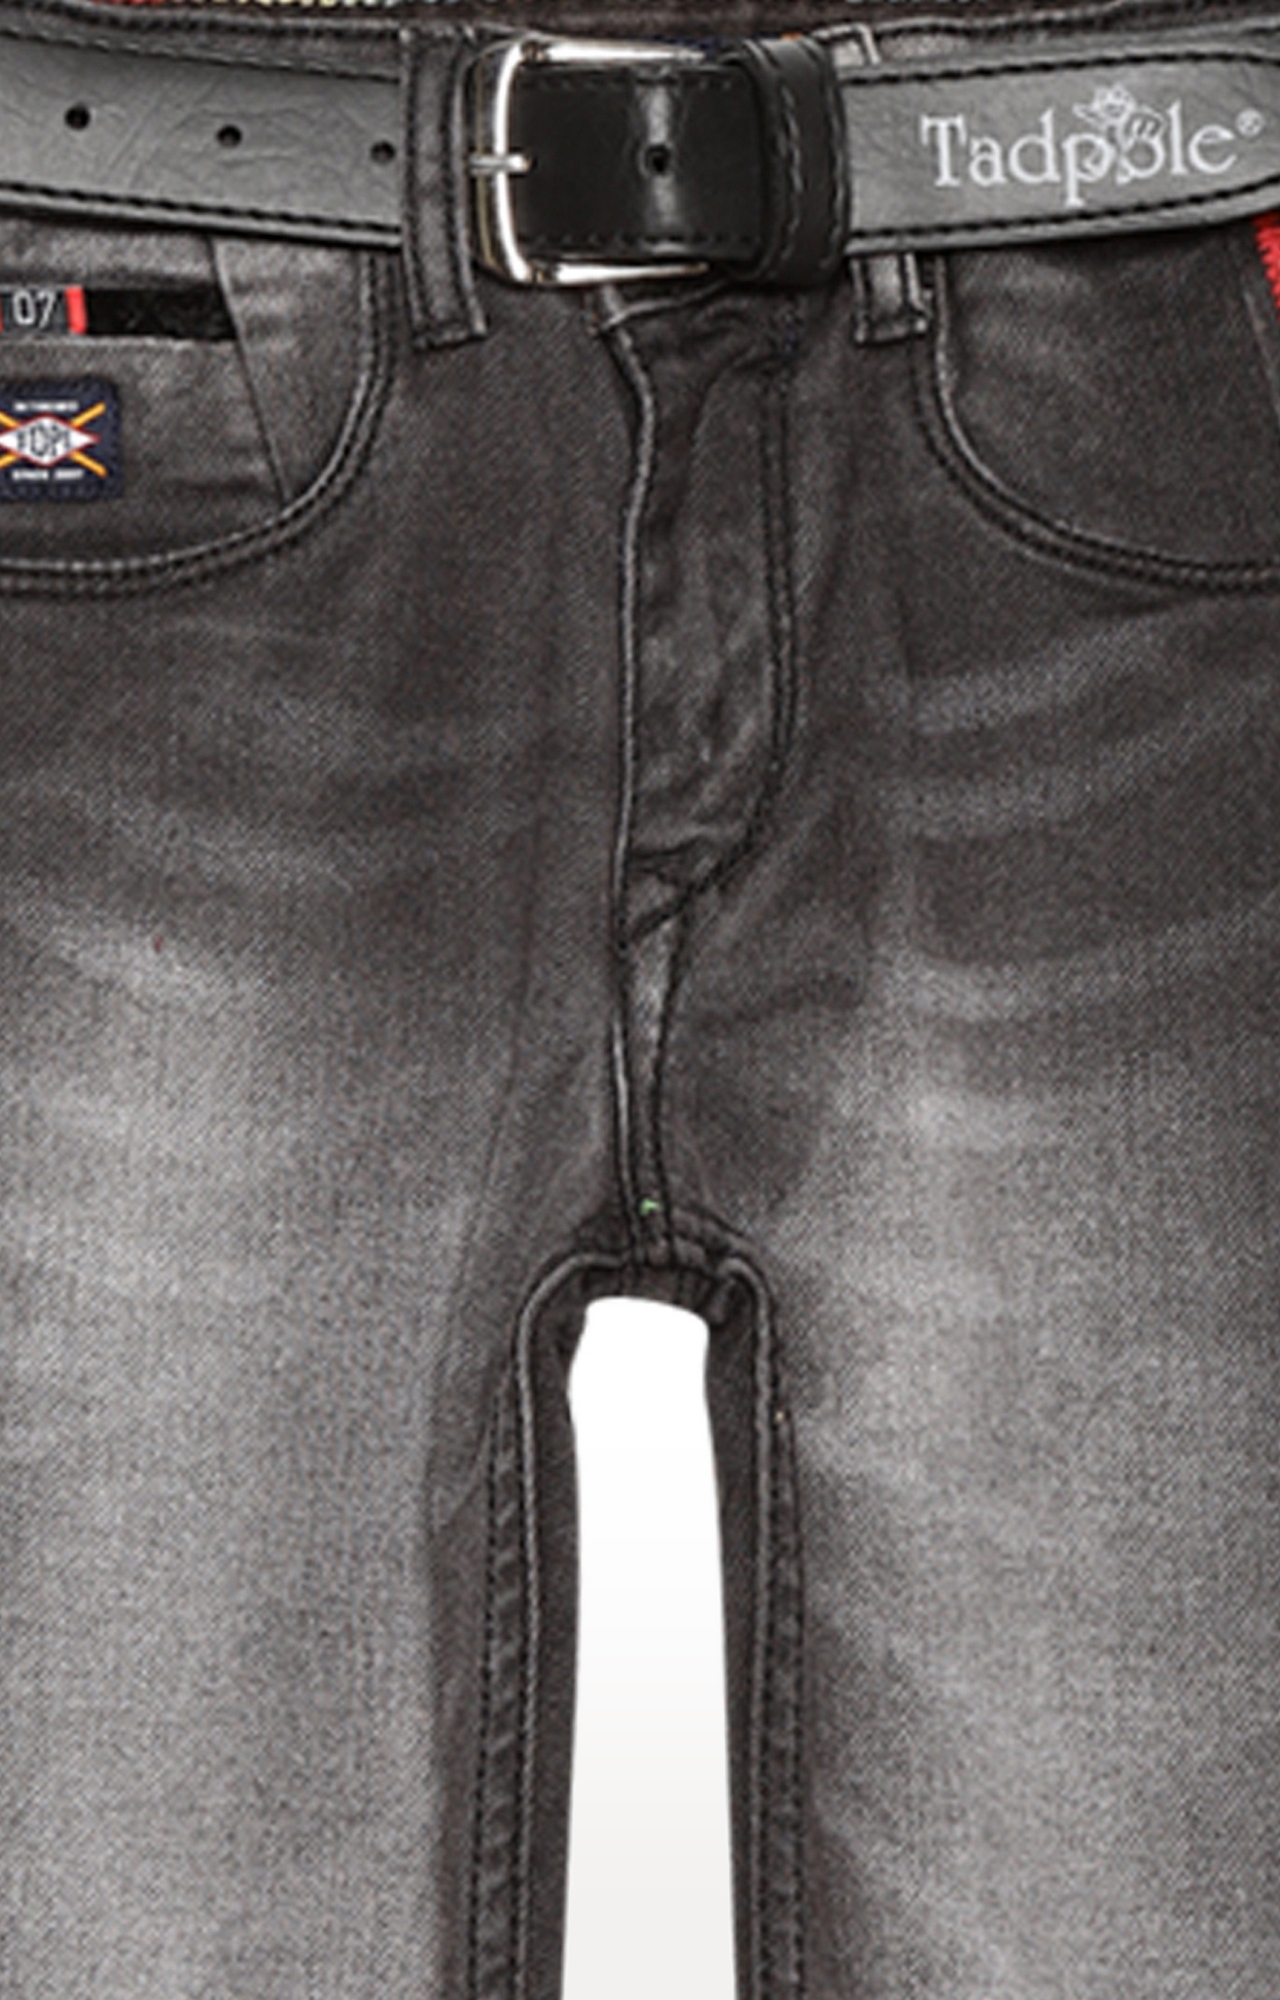 Tadpole | Black Solid Jeans 2